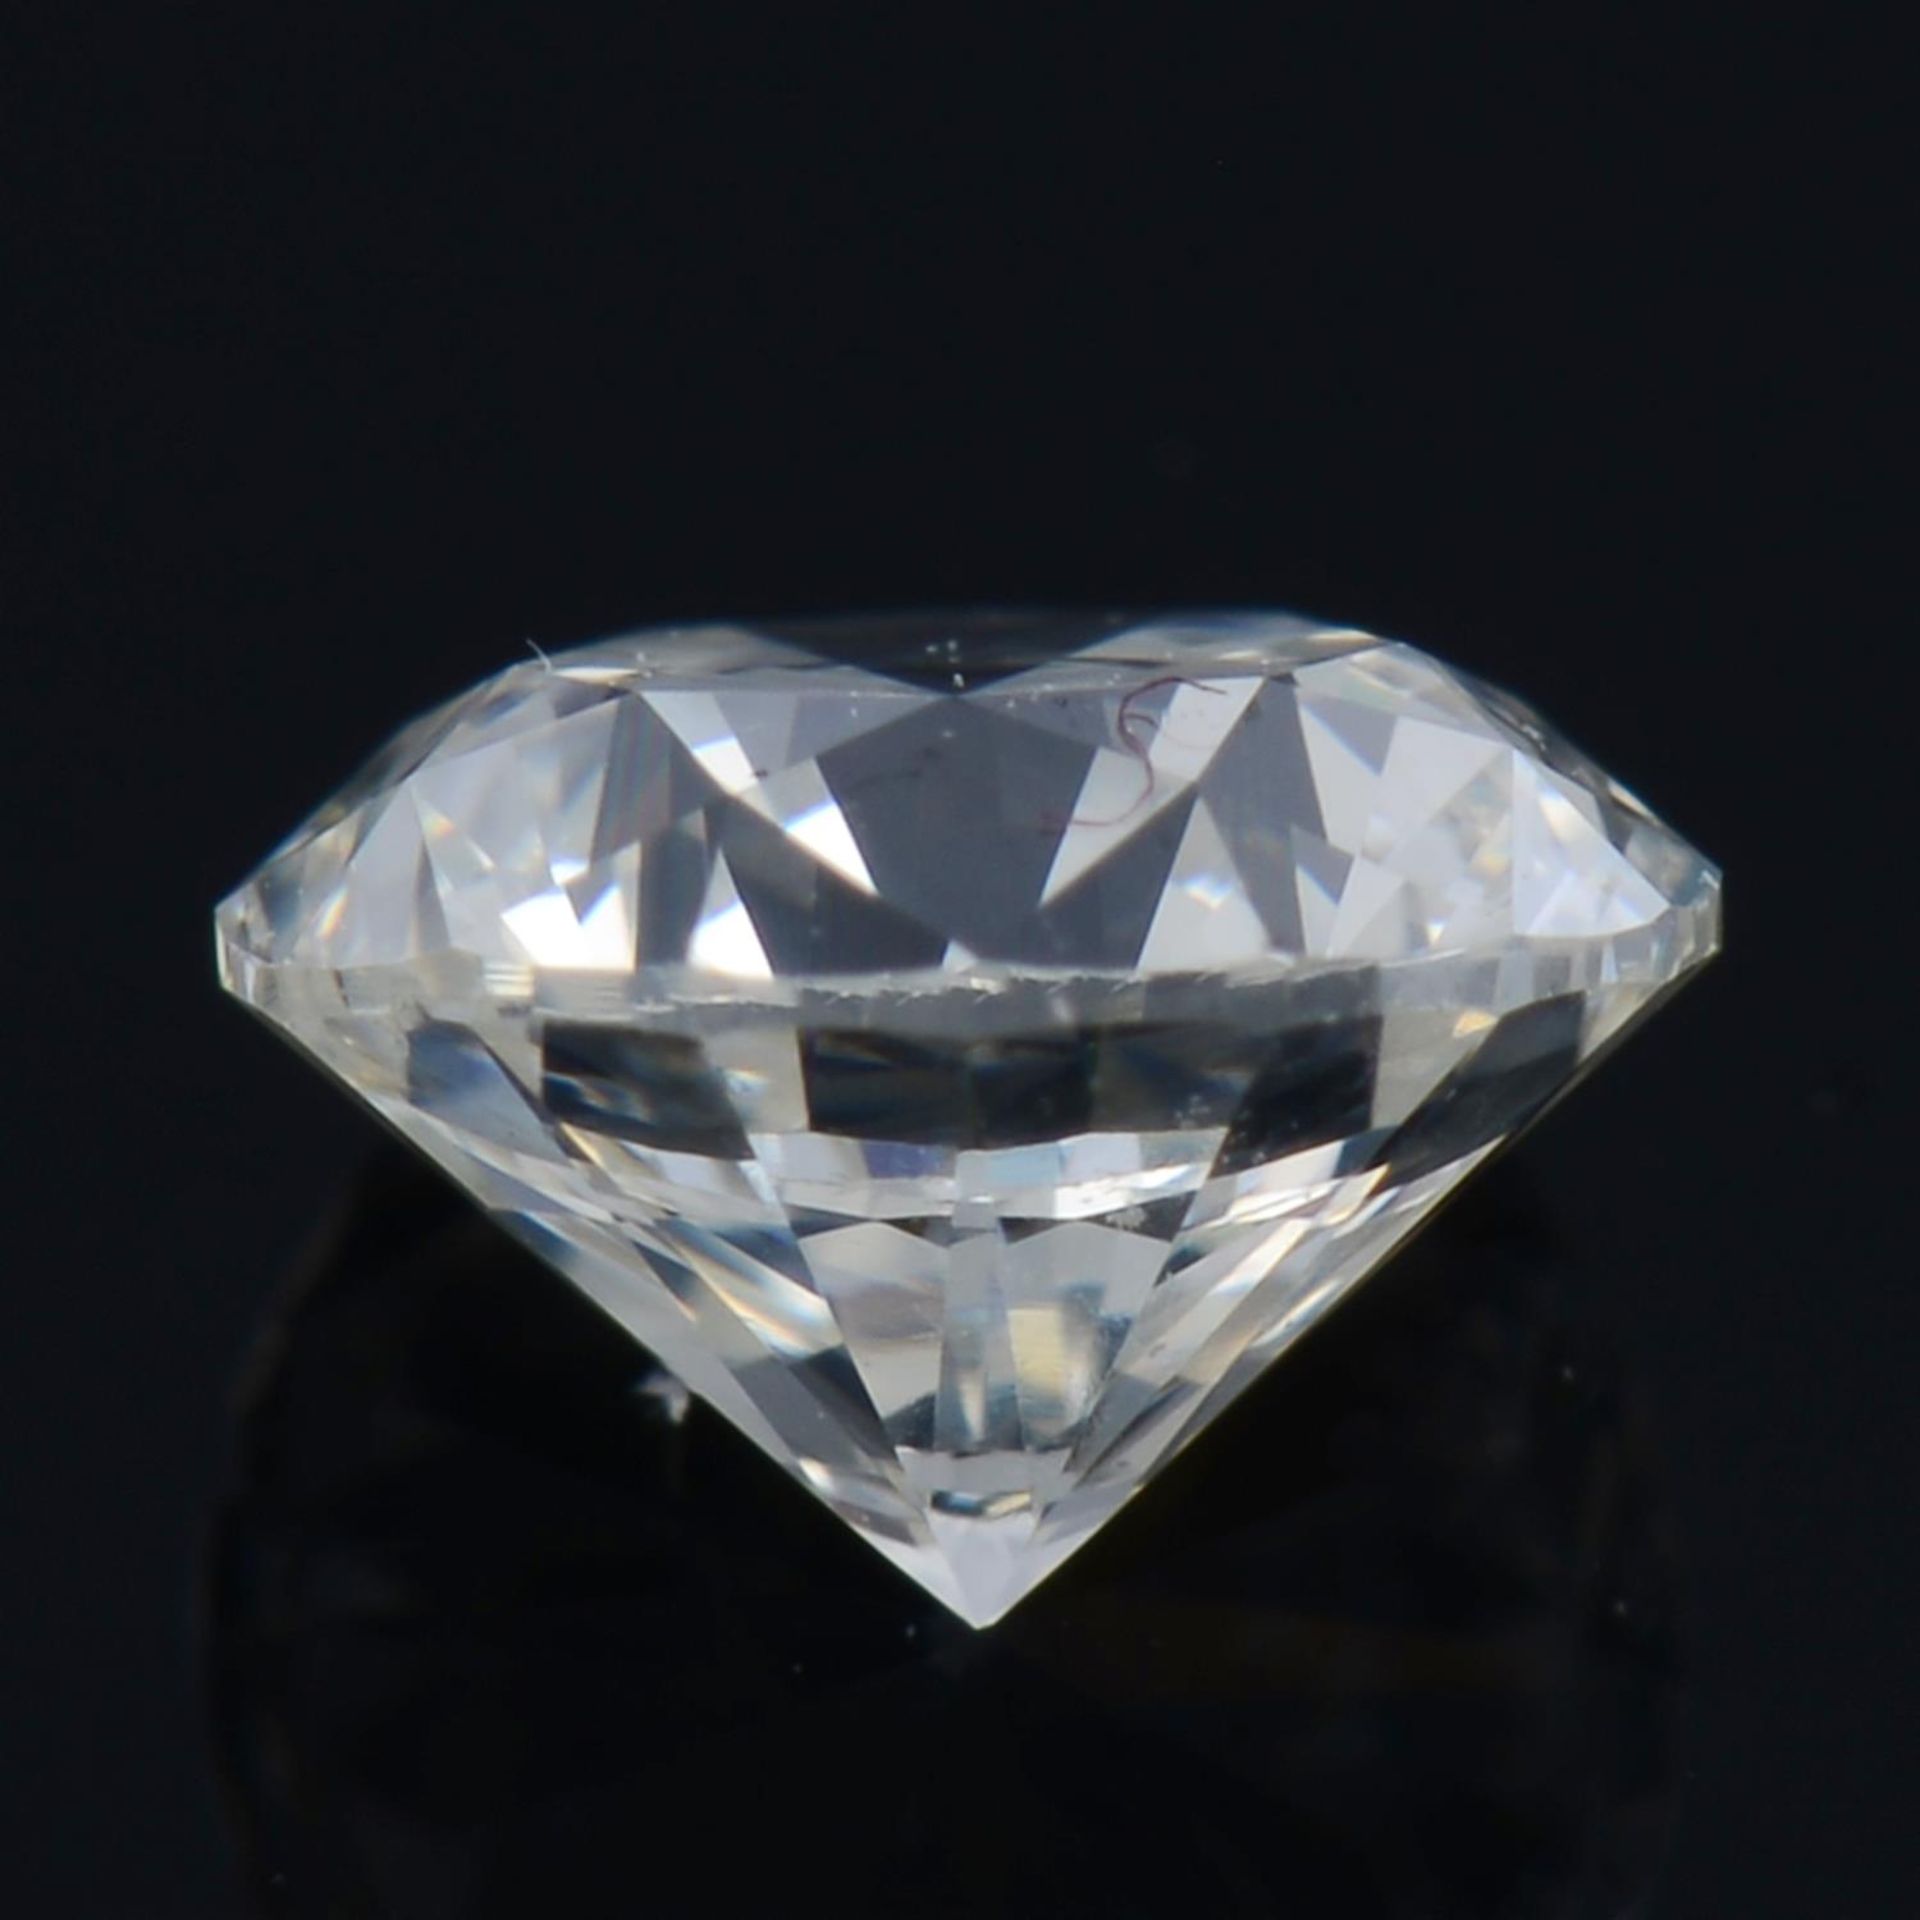 Brilliant-cut diamond, 0.45ct - Image 2 of 2